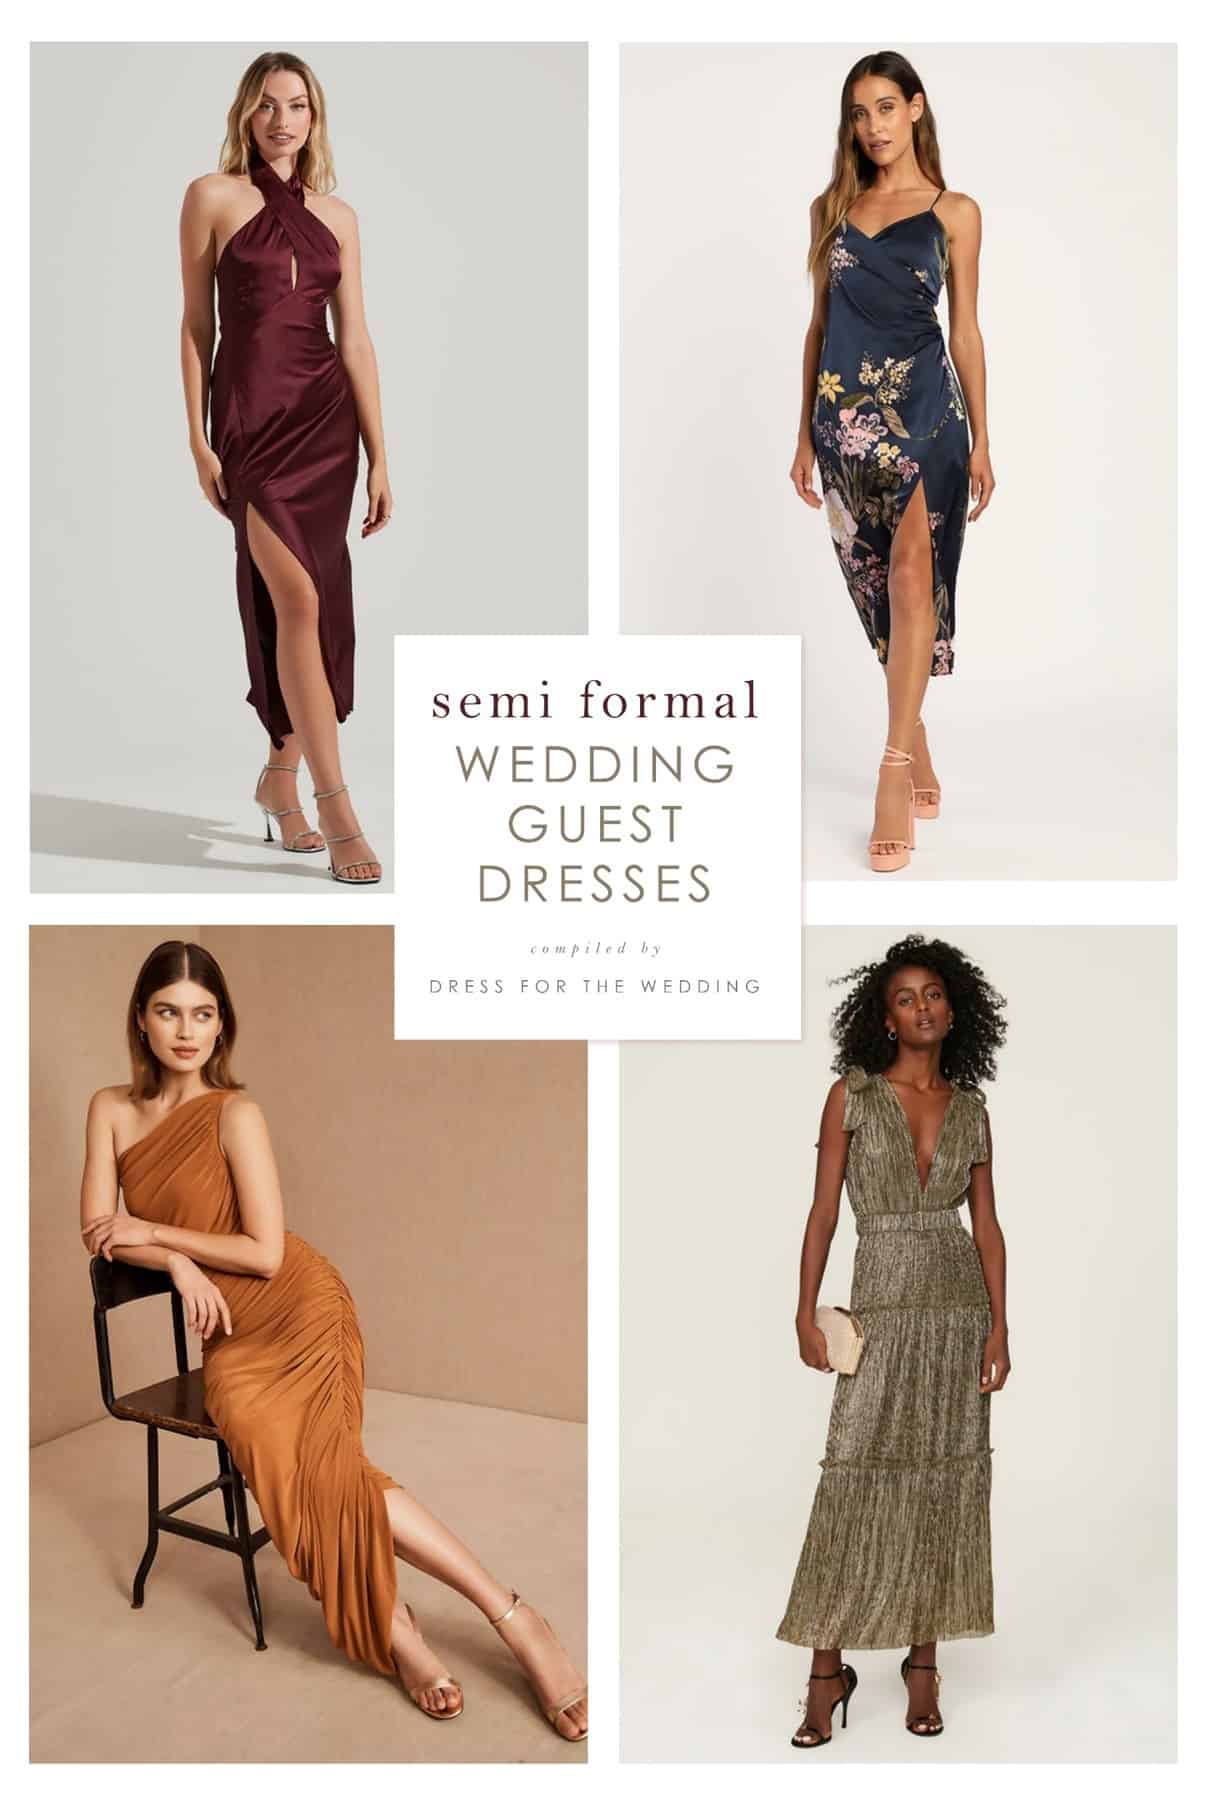 Dresses | Shop Women's Dresses Online | boohoo UK